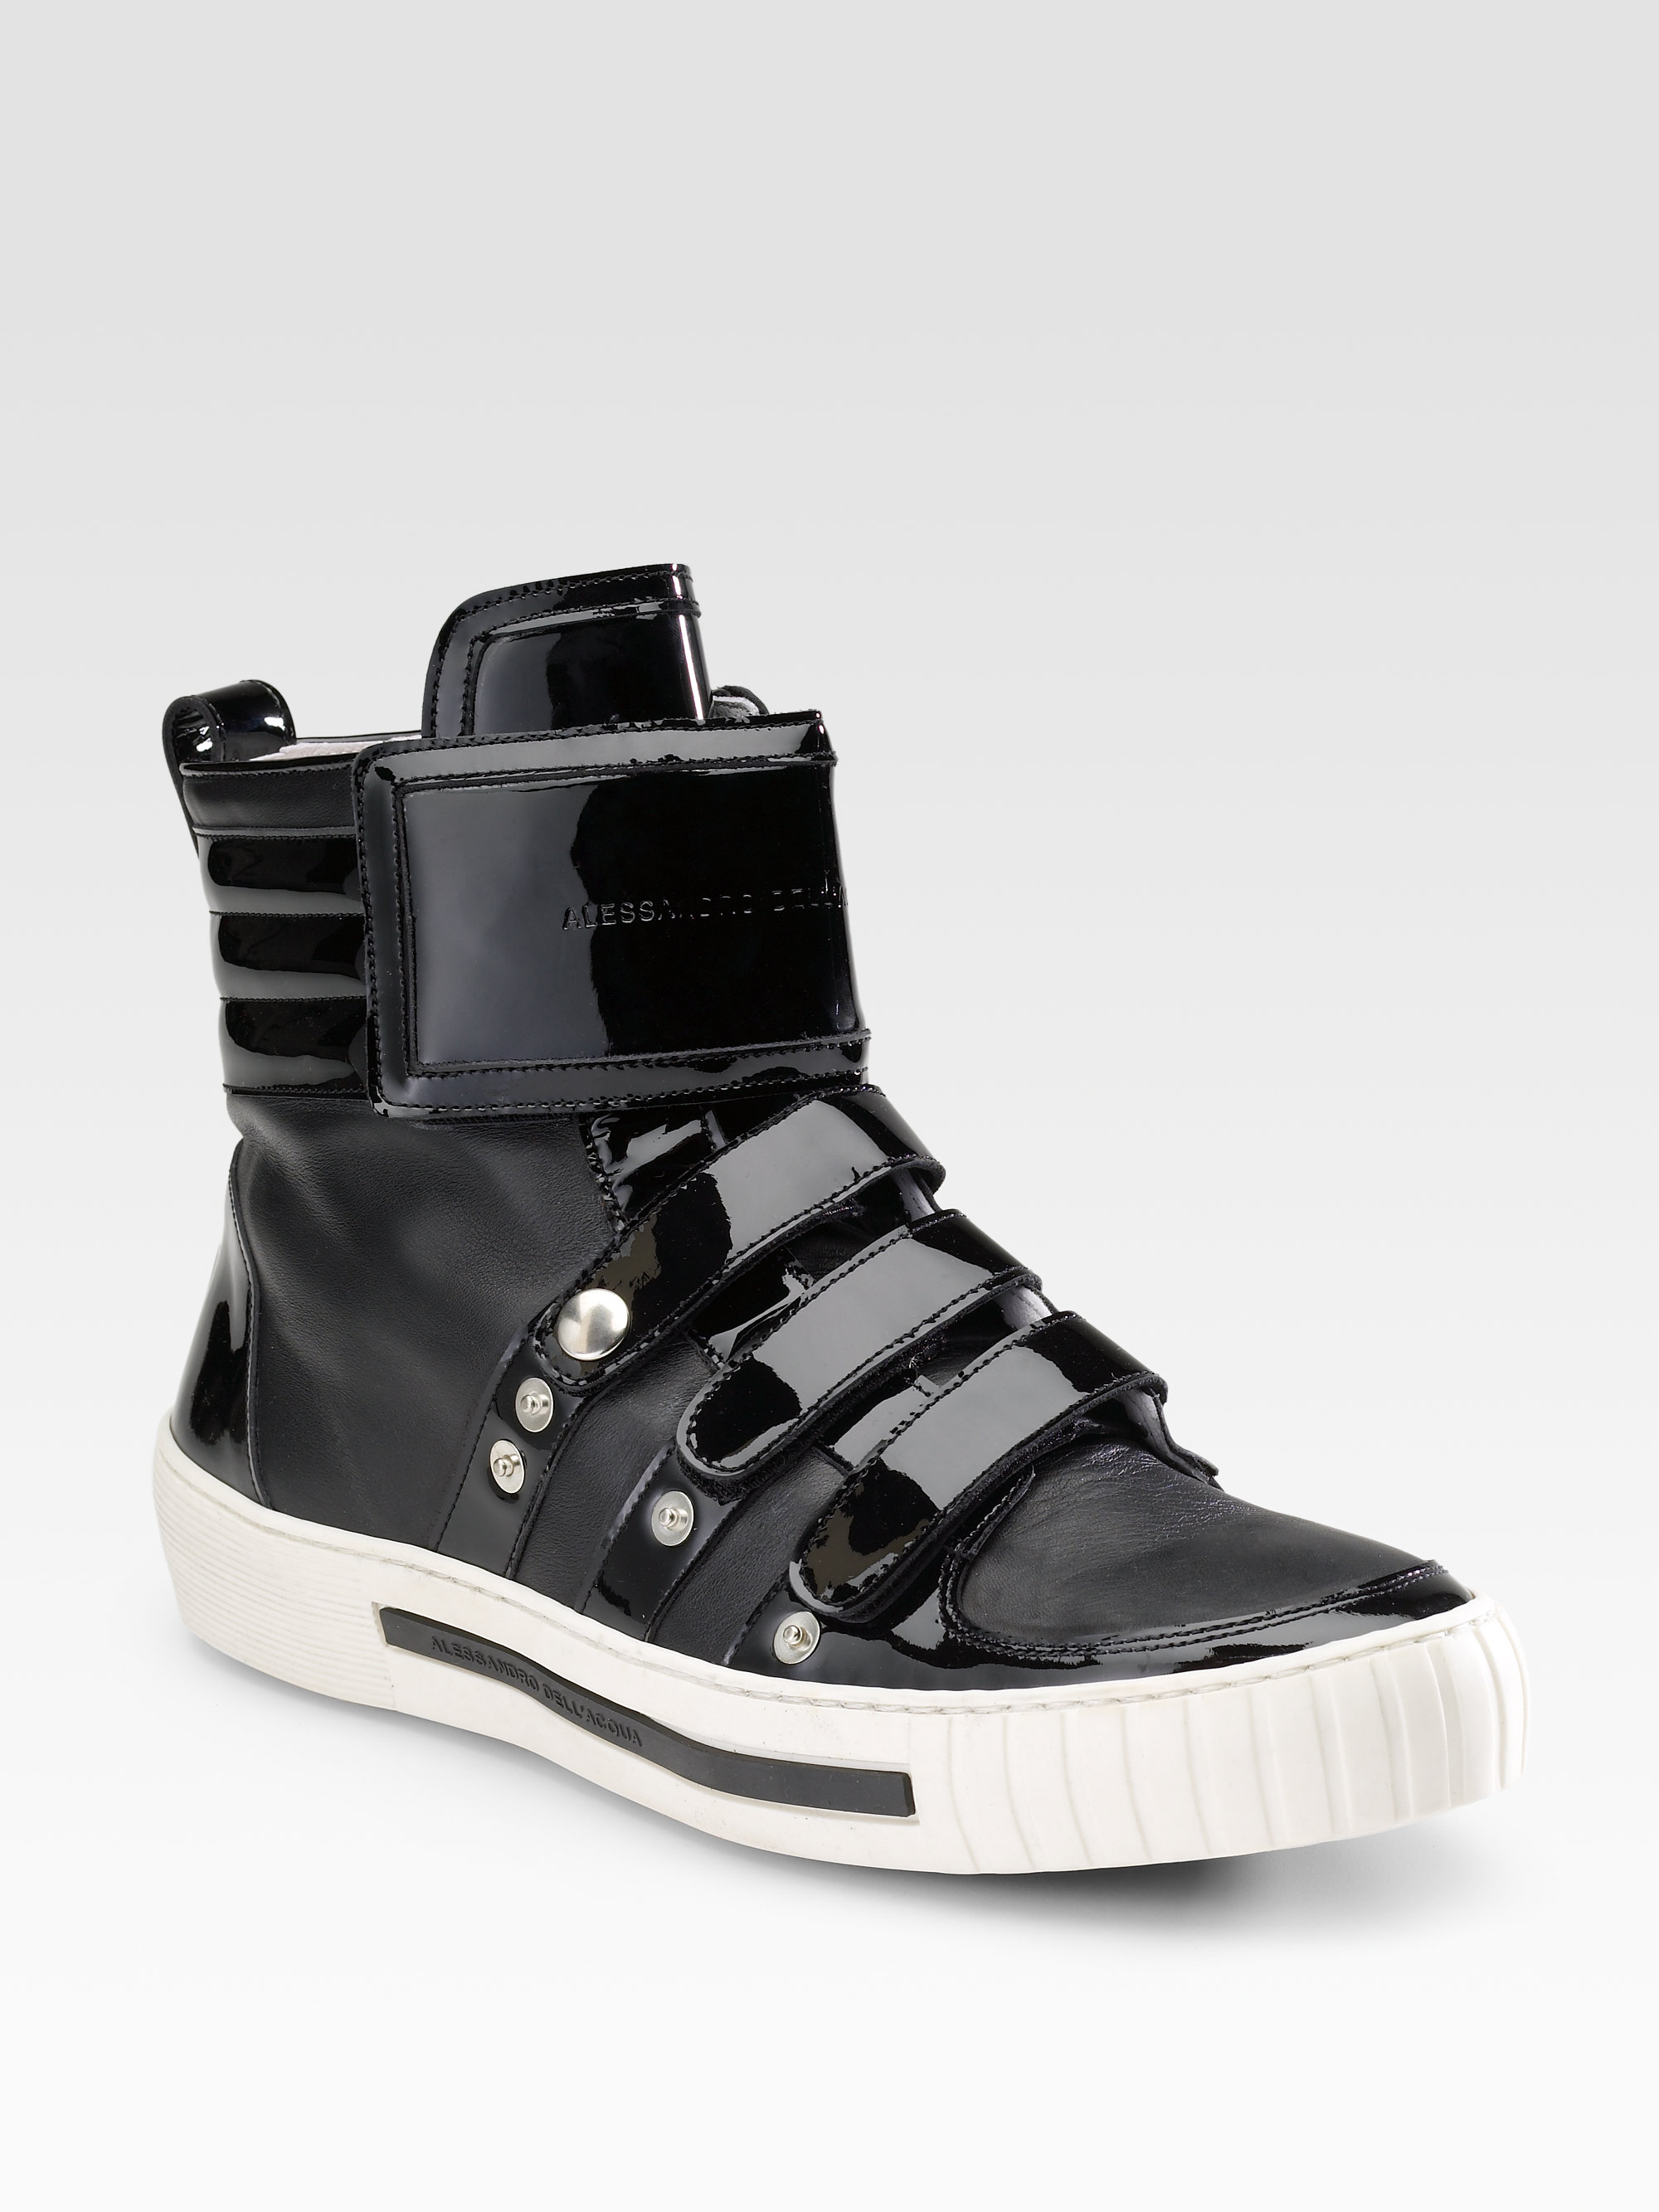 Alessandro Dell'acqua Hightop Sneakers in Black for Men - Lyst